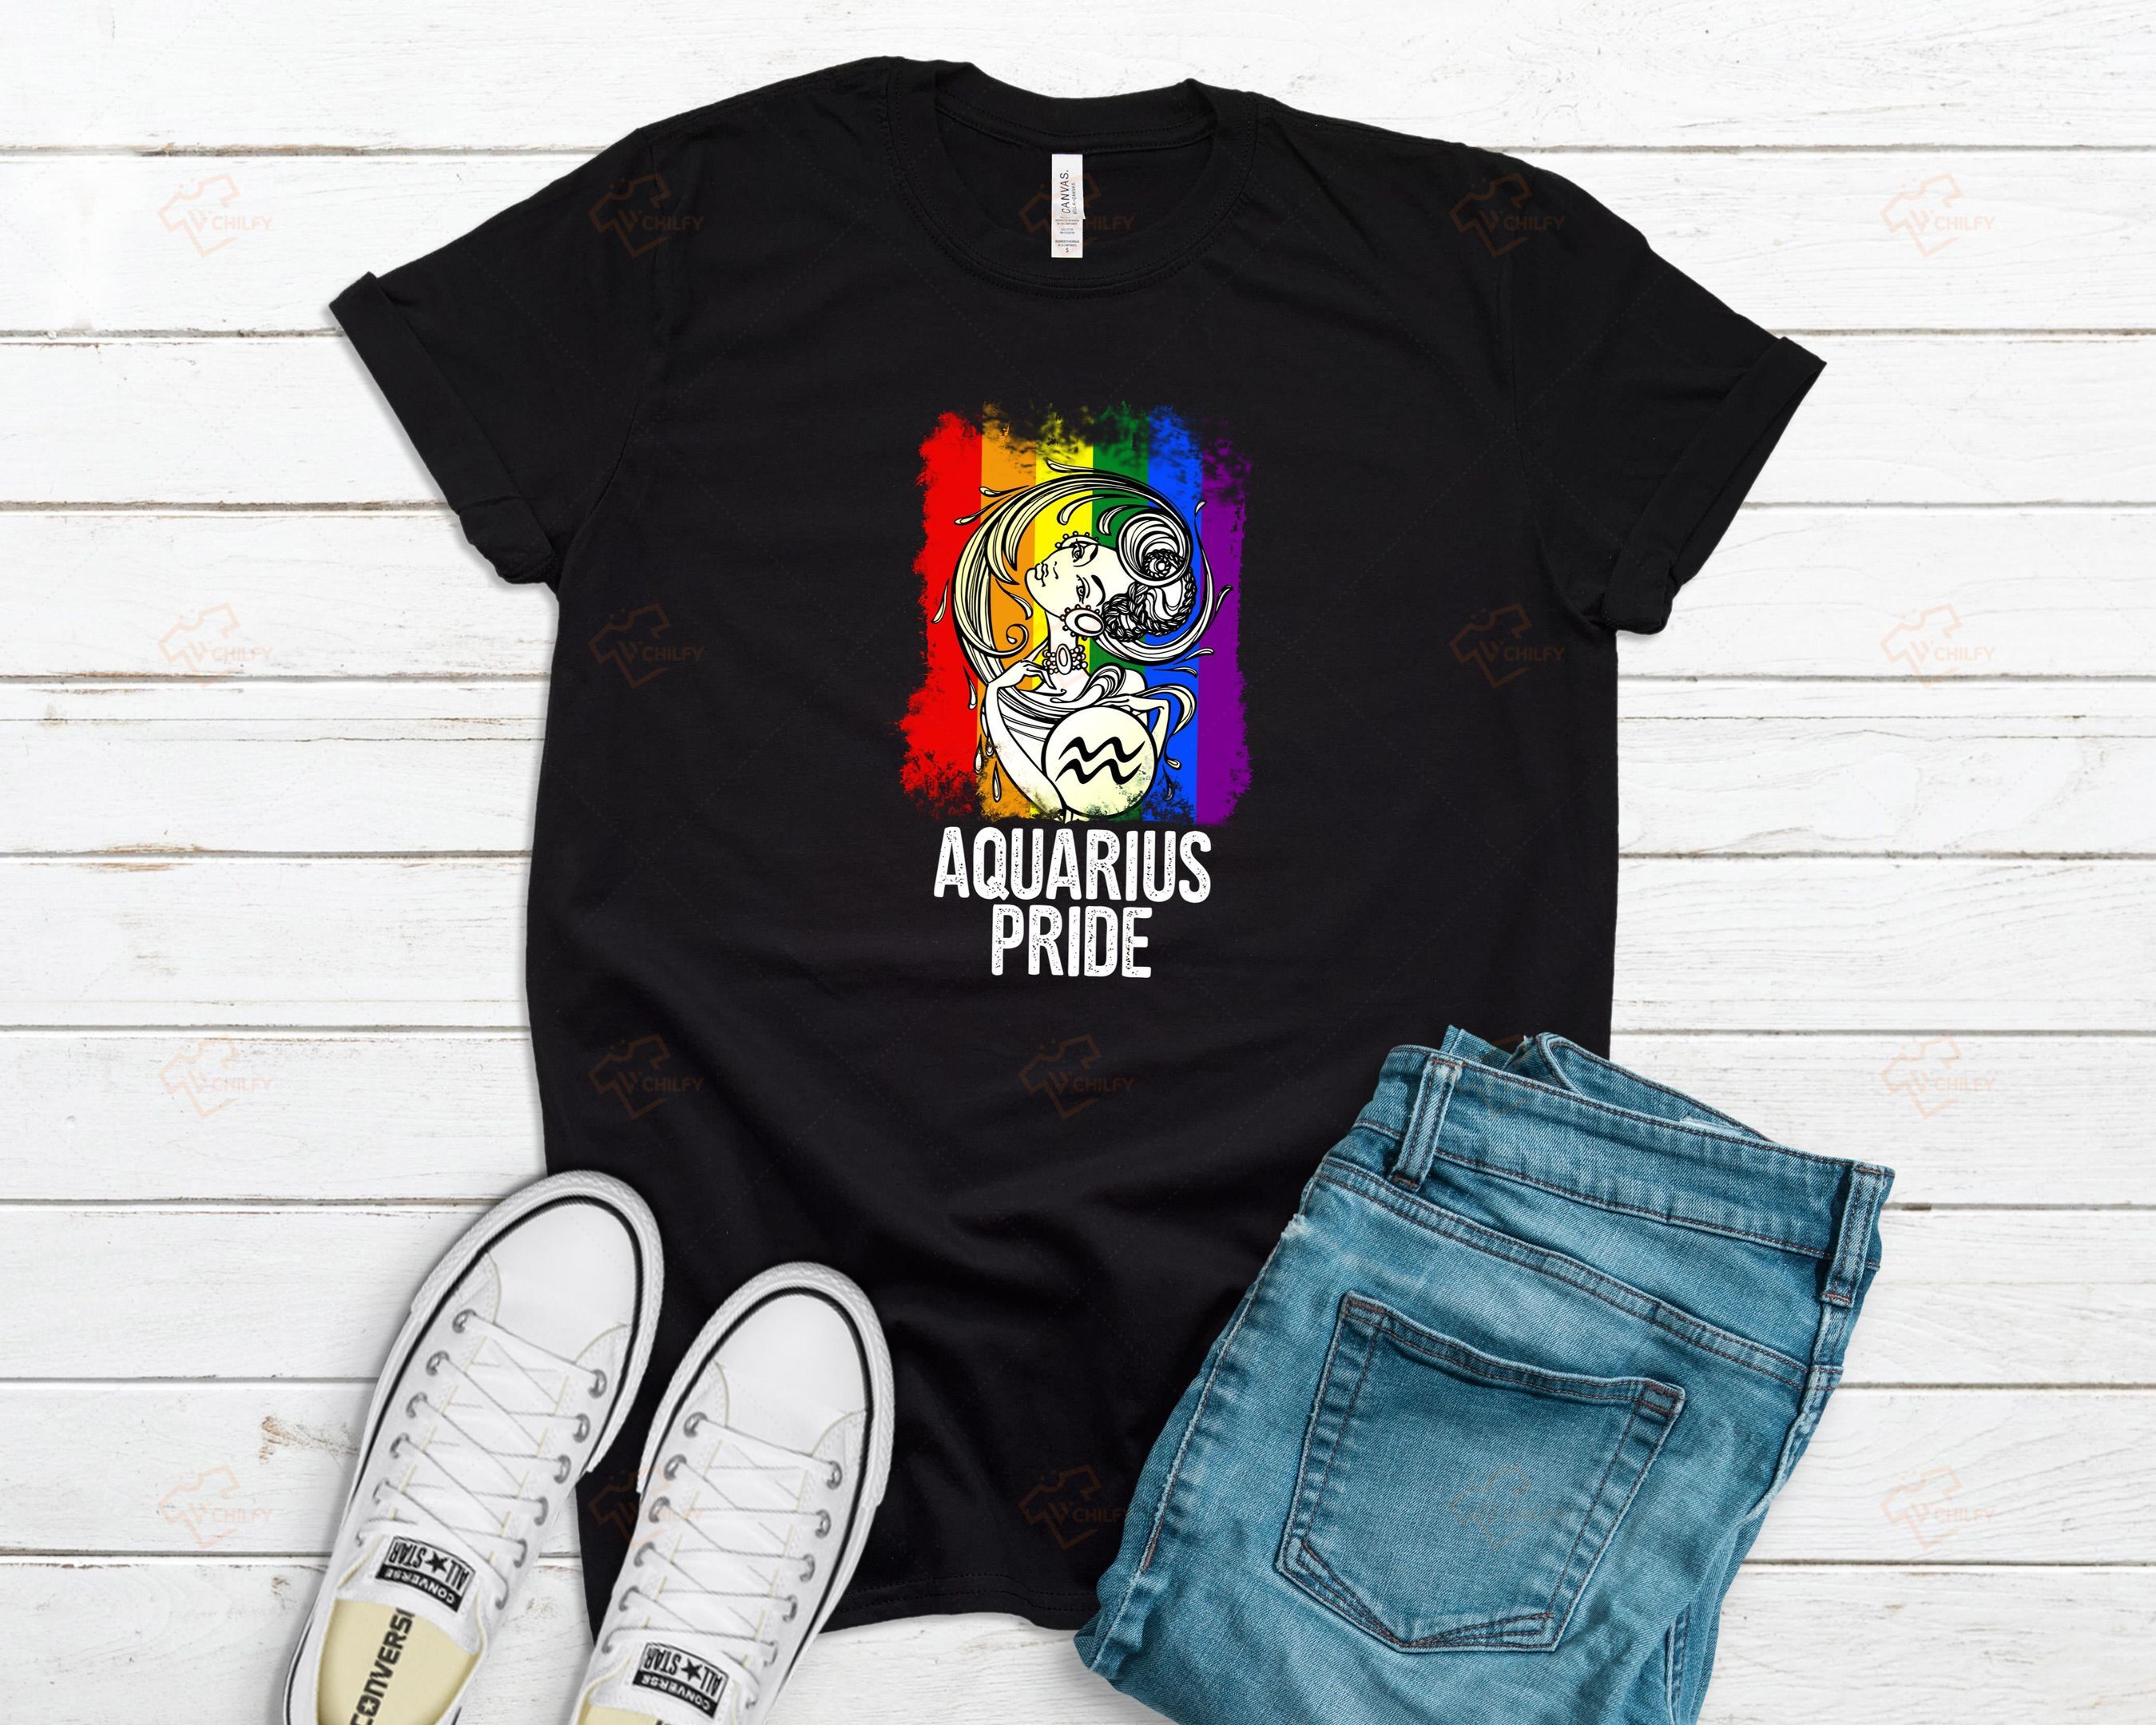 12 Signs Of The Zodiac Aquarius Shirt, Lgbt Shirt, Lgbt Pride Shirt, Lgbt Queer, Lgbt Zodiac Shirt